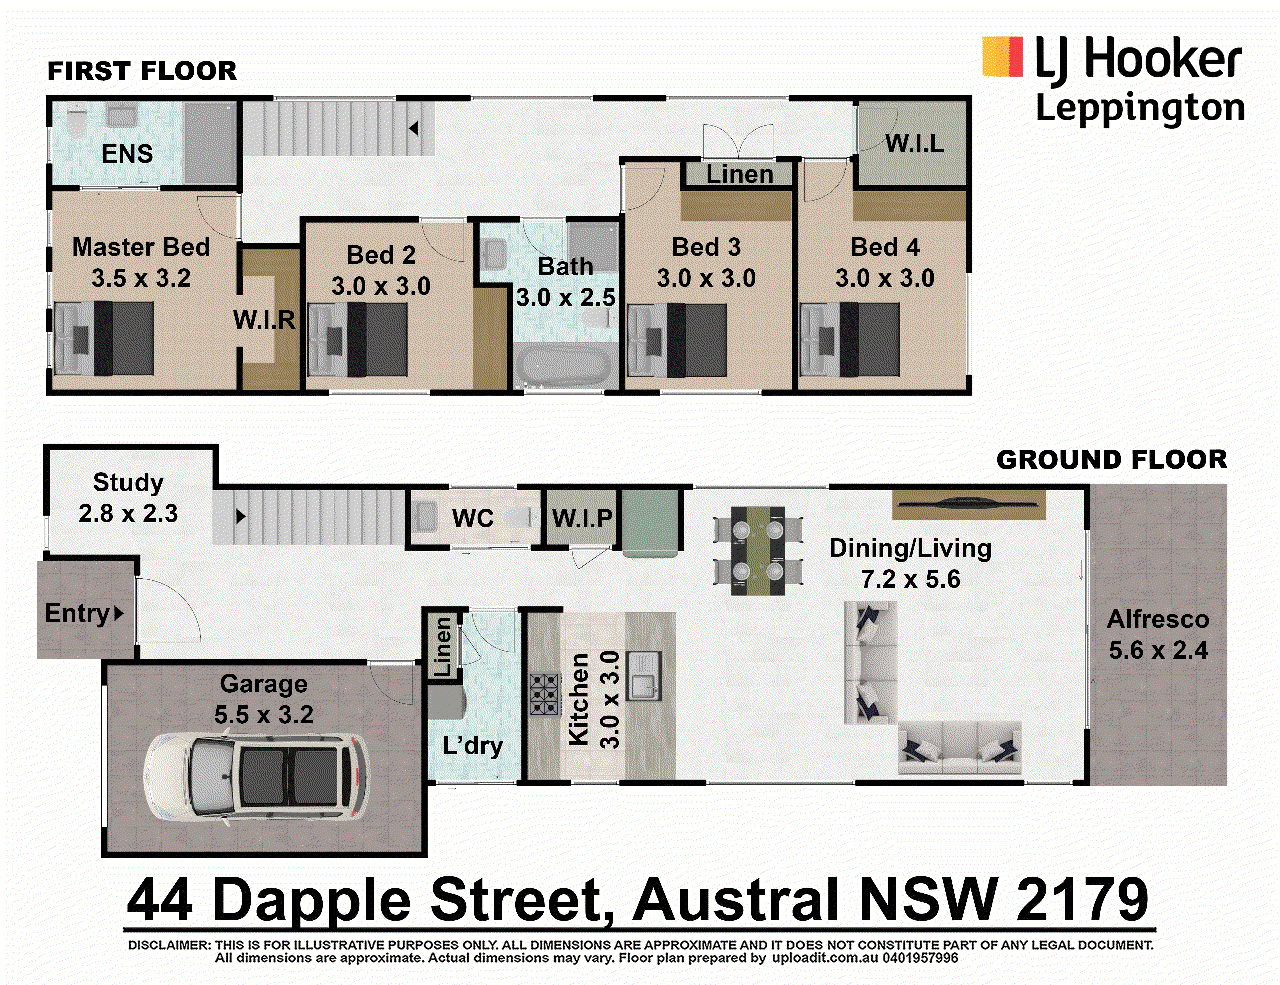 Lot 100, 4 Dapple Street, AUSTRAL, NSW 2179